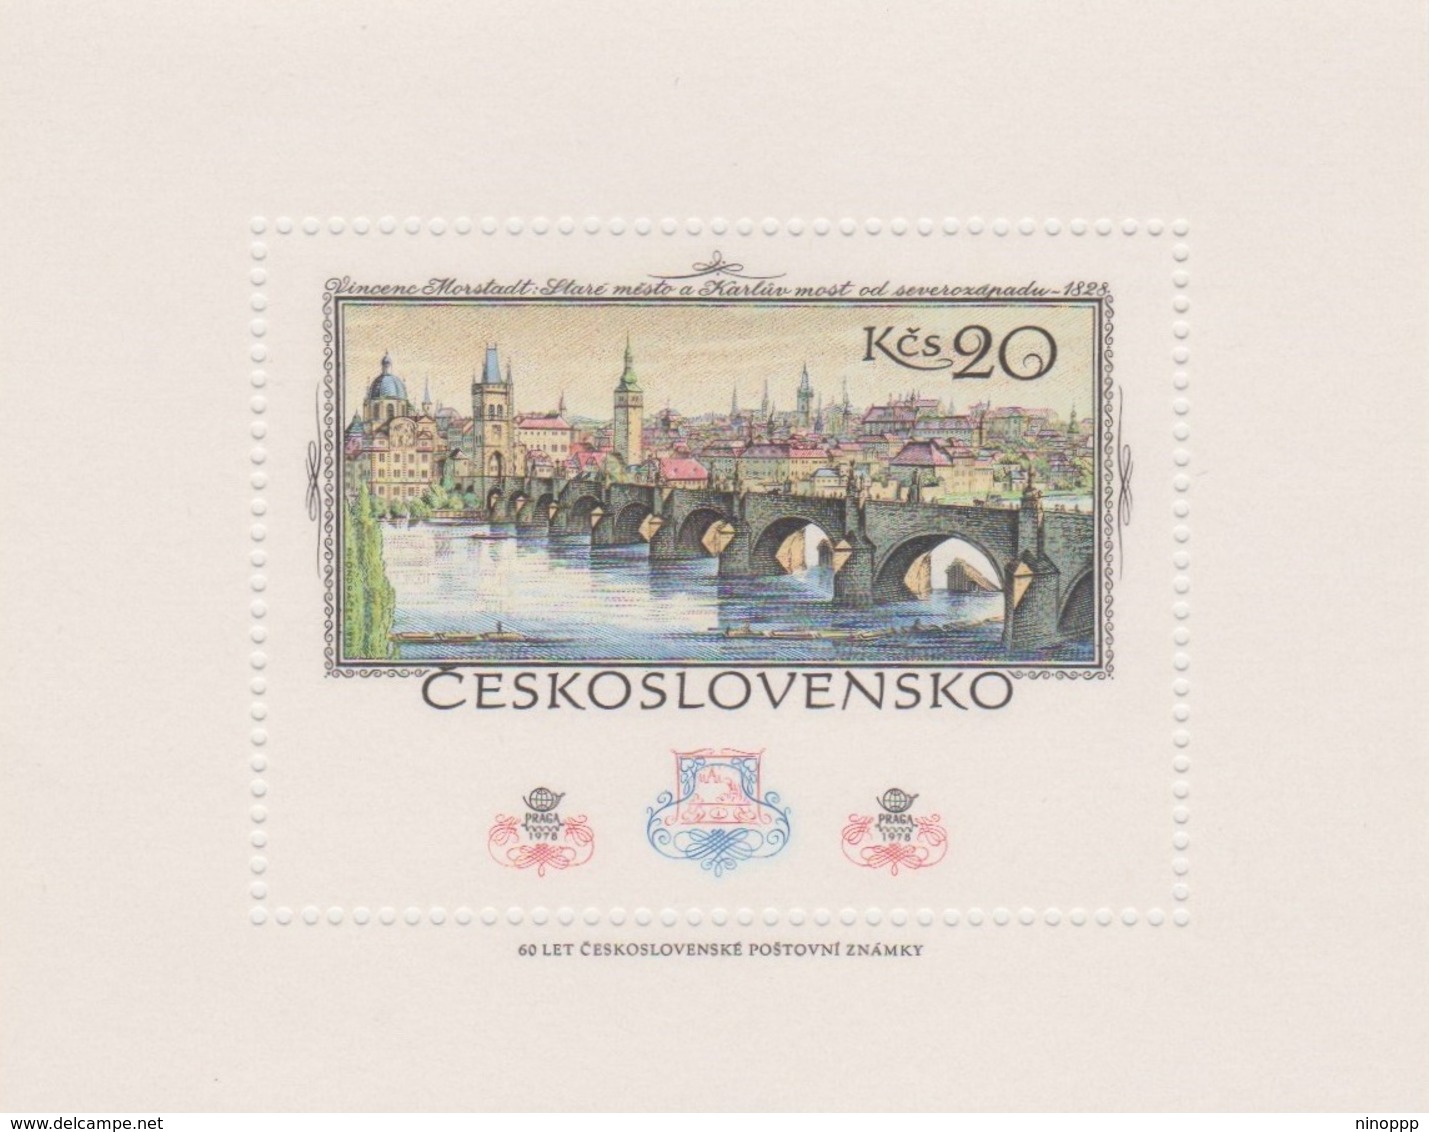 Czechoslovakia Scott 2196 1978 Praga International Stamp Expo, Souvenir Sheet, Mint Never Hinged - Covers & Documents